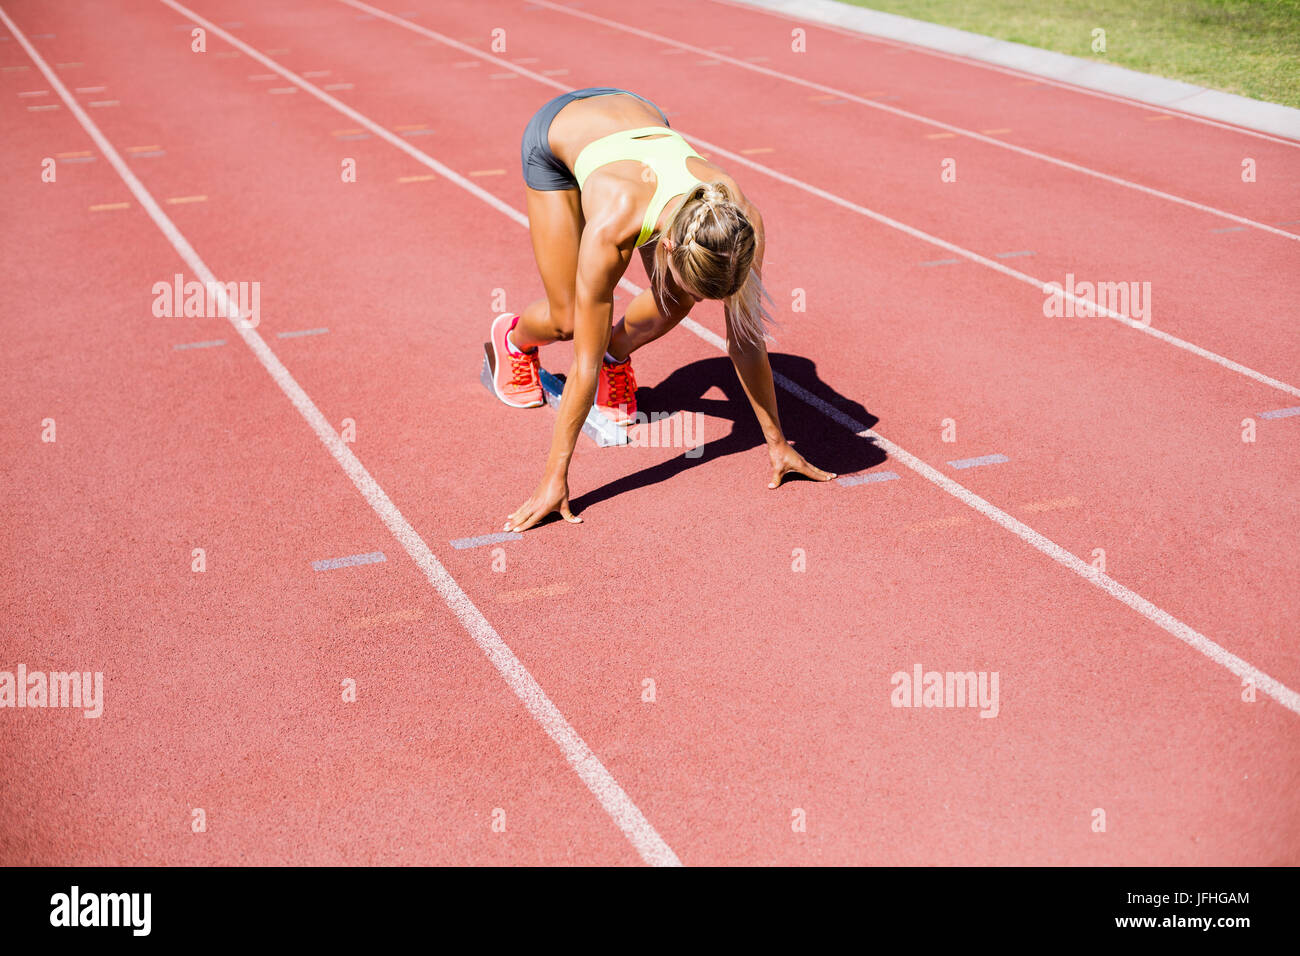 Female athlete ready to run on running track Stock Photo